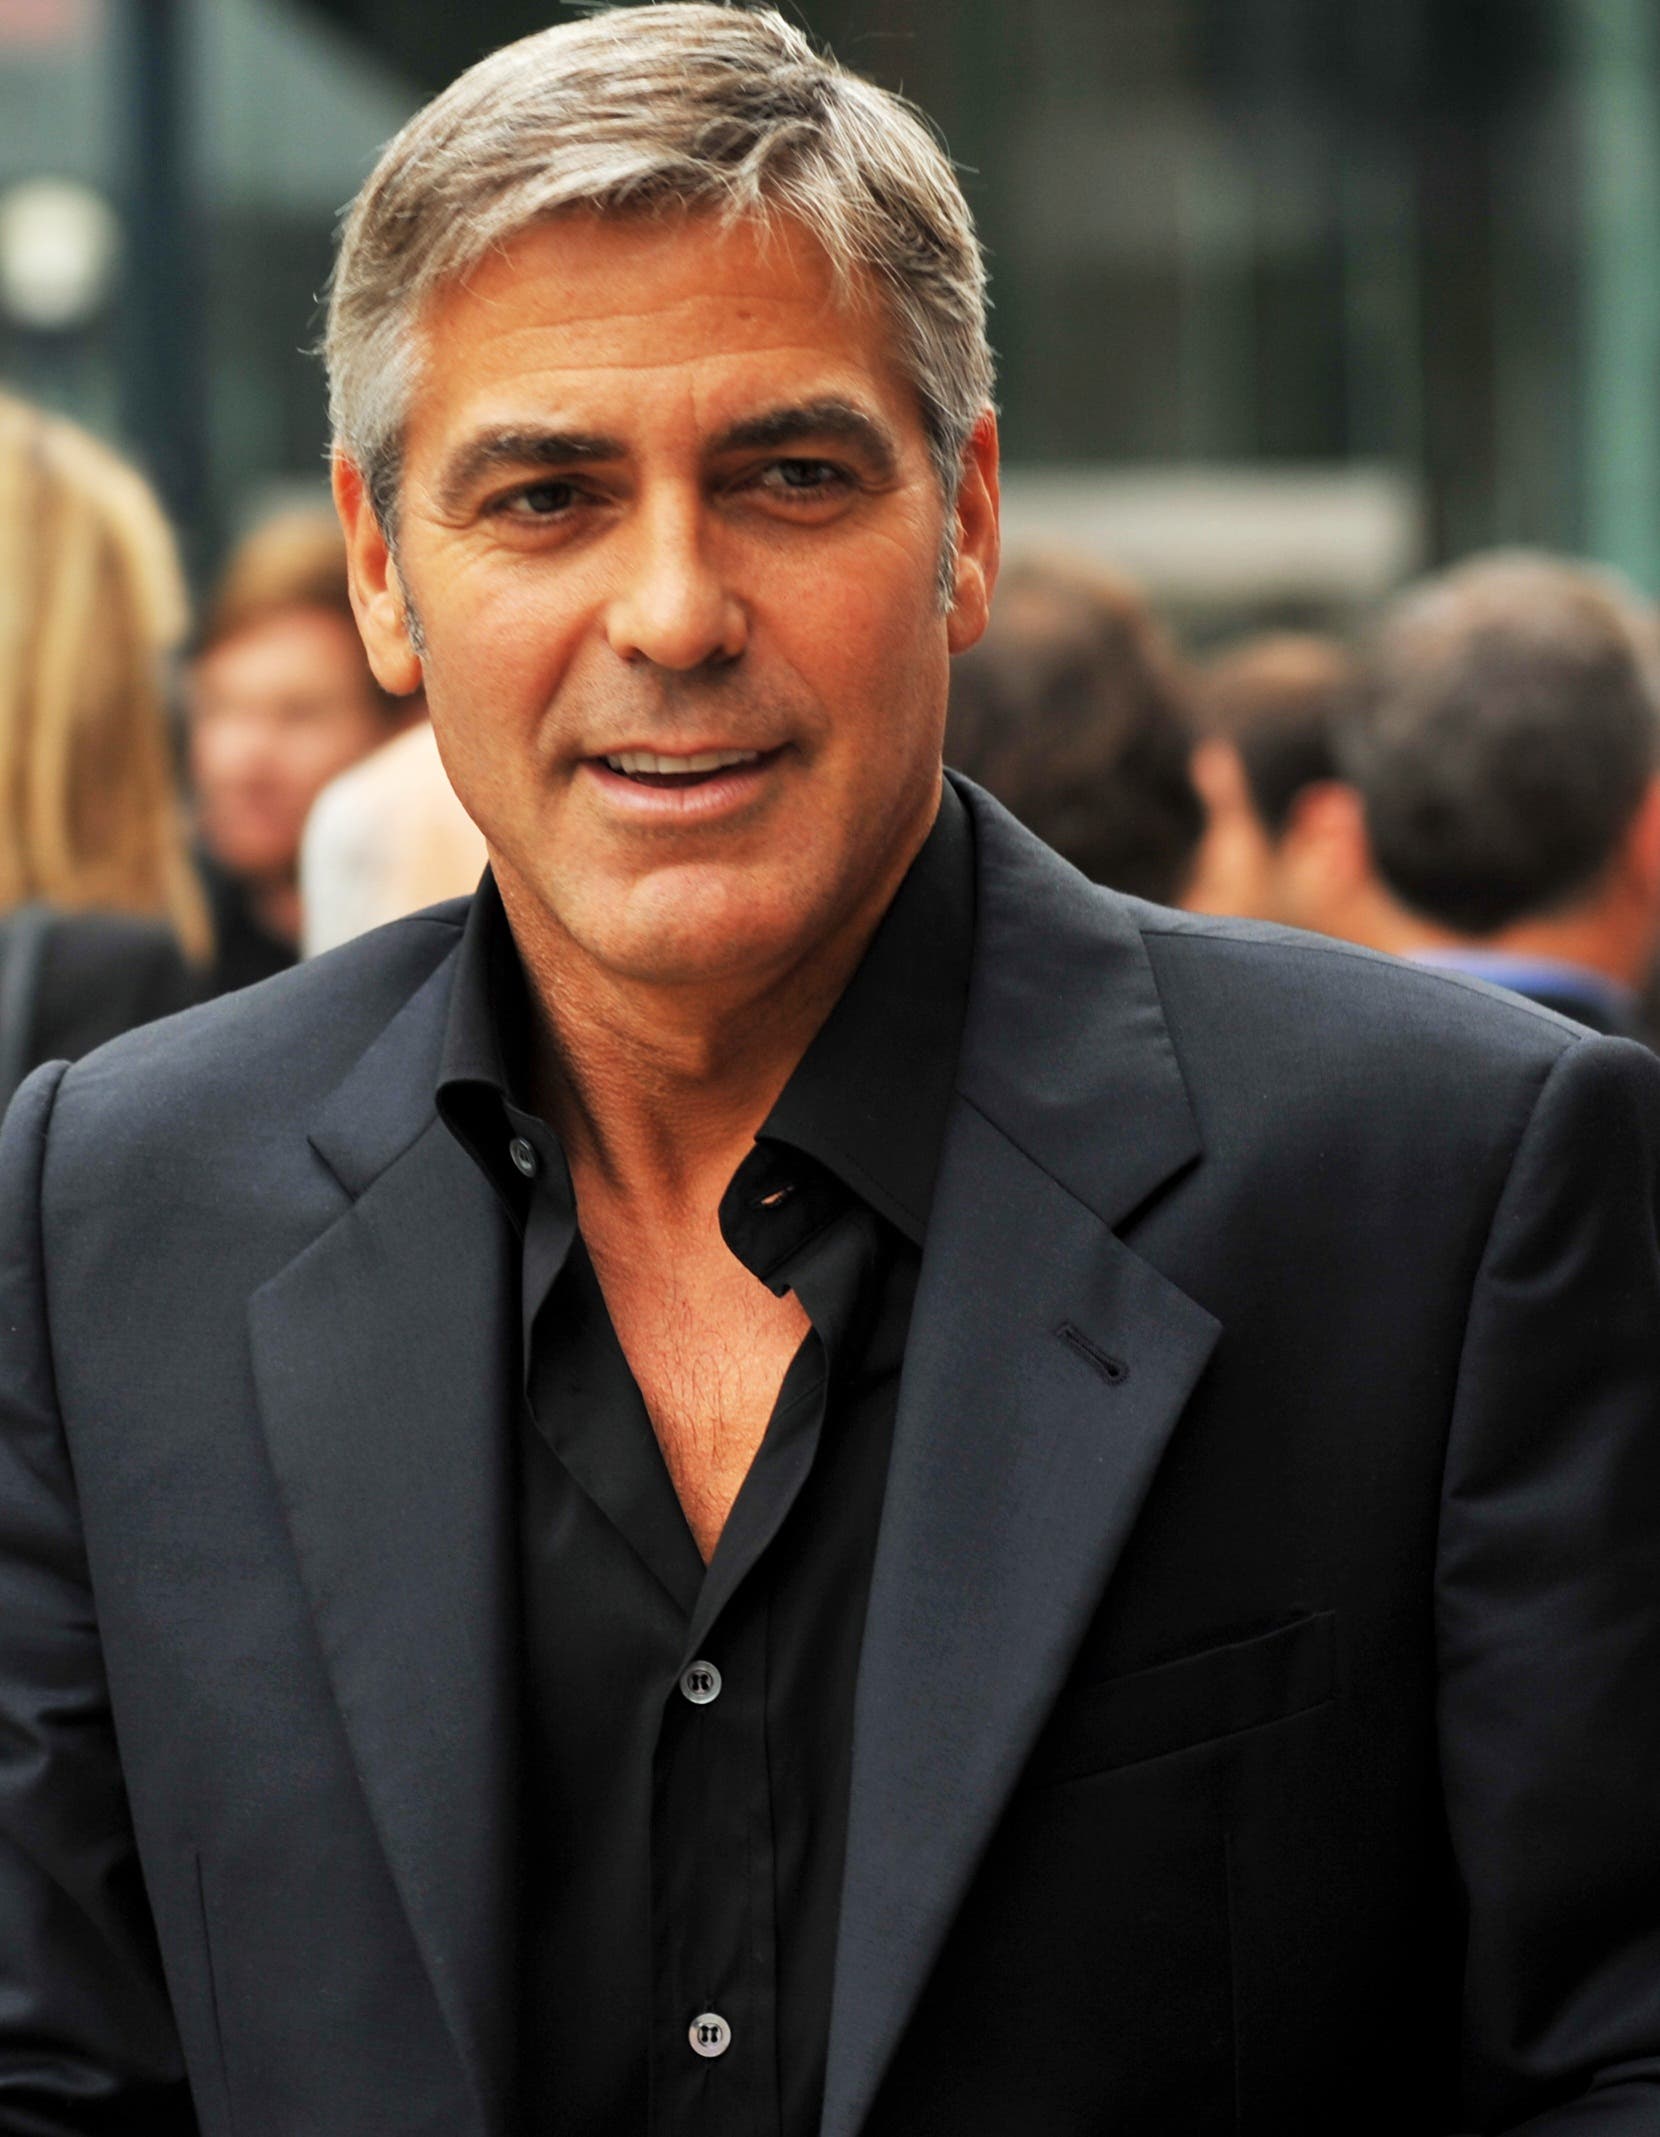 George Clooney llama “fascista xenófobo” a Donald Trump